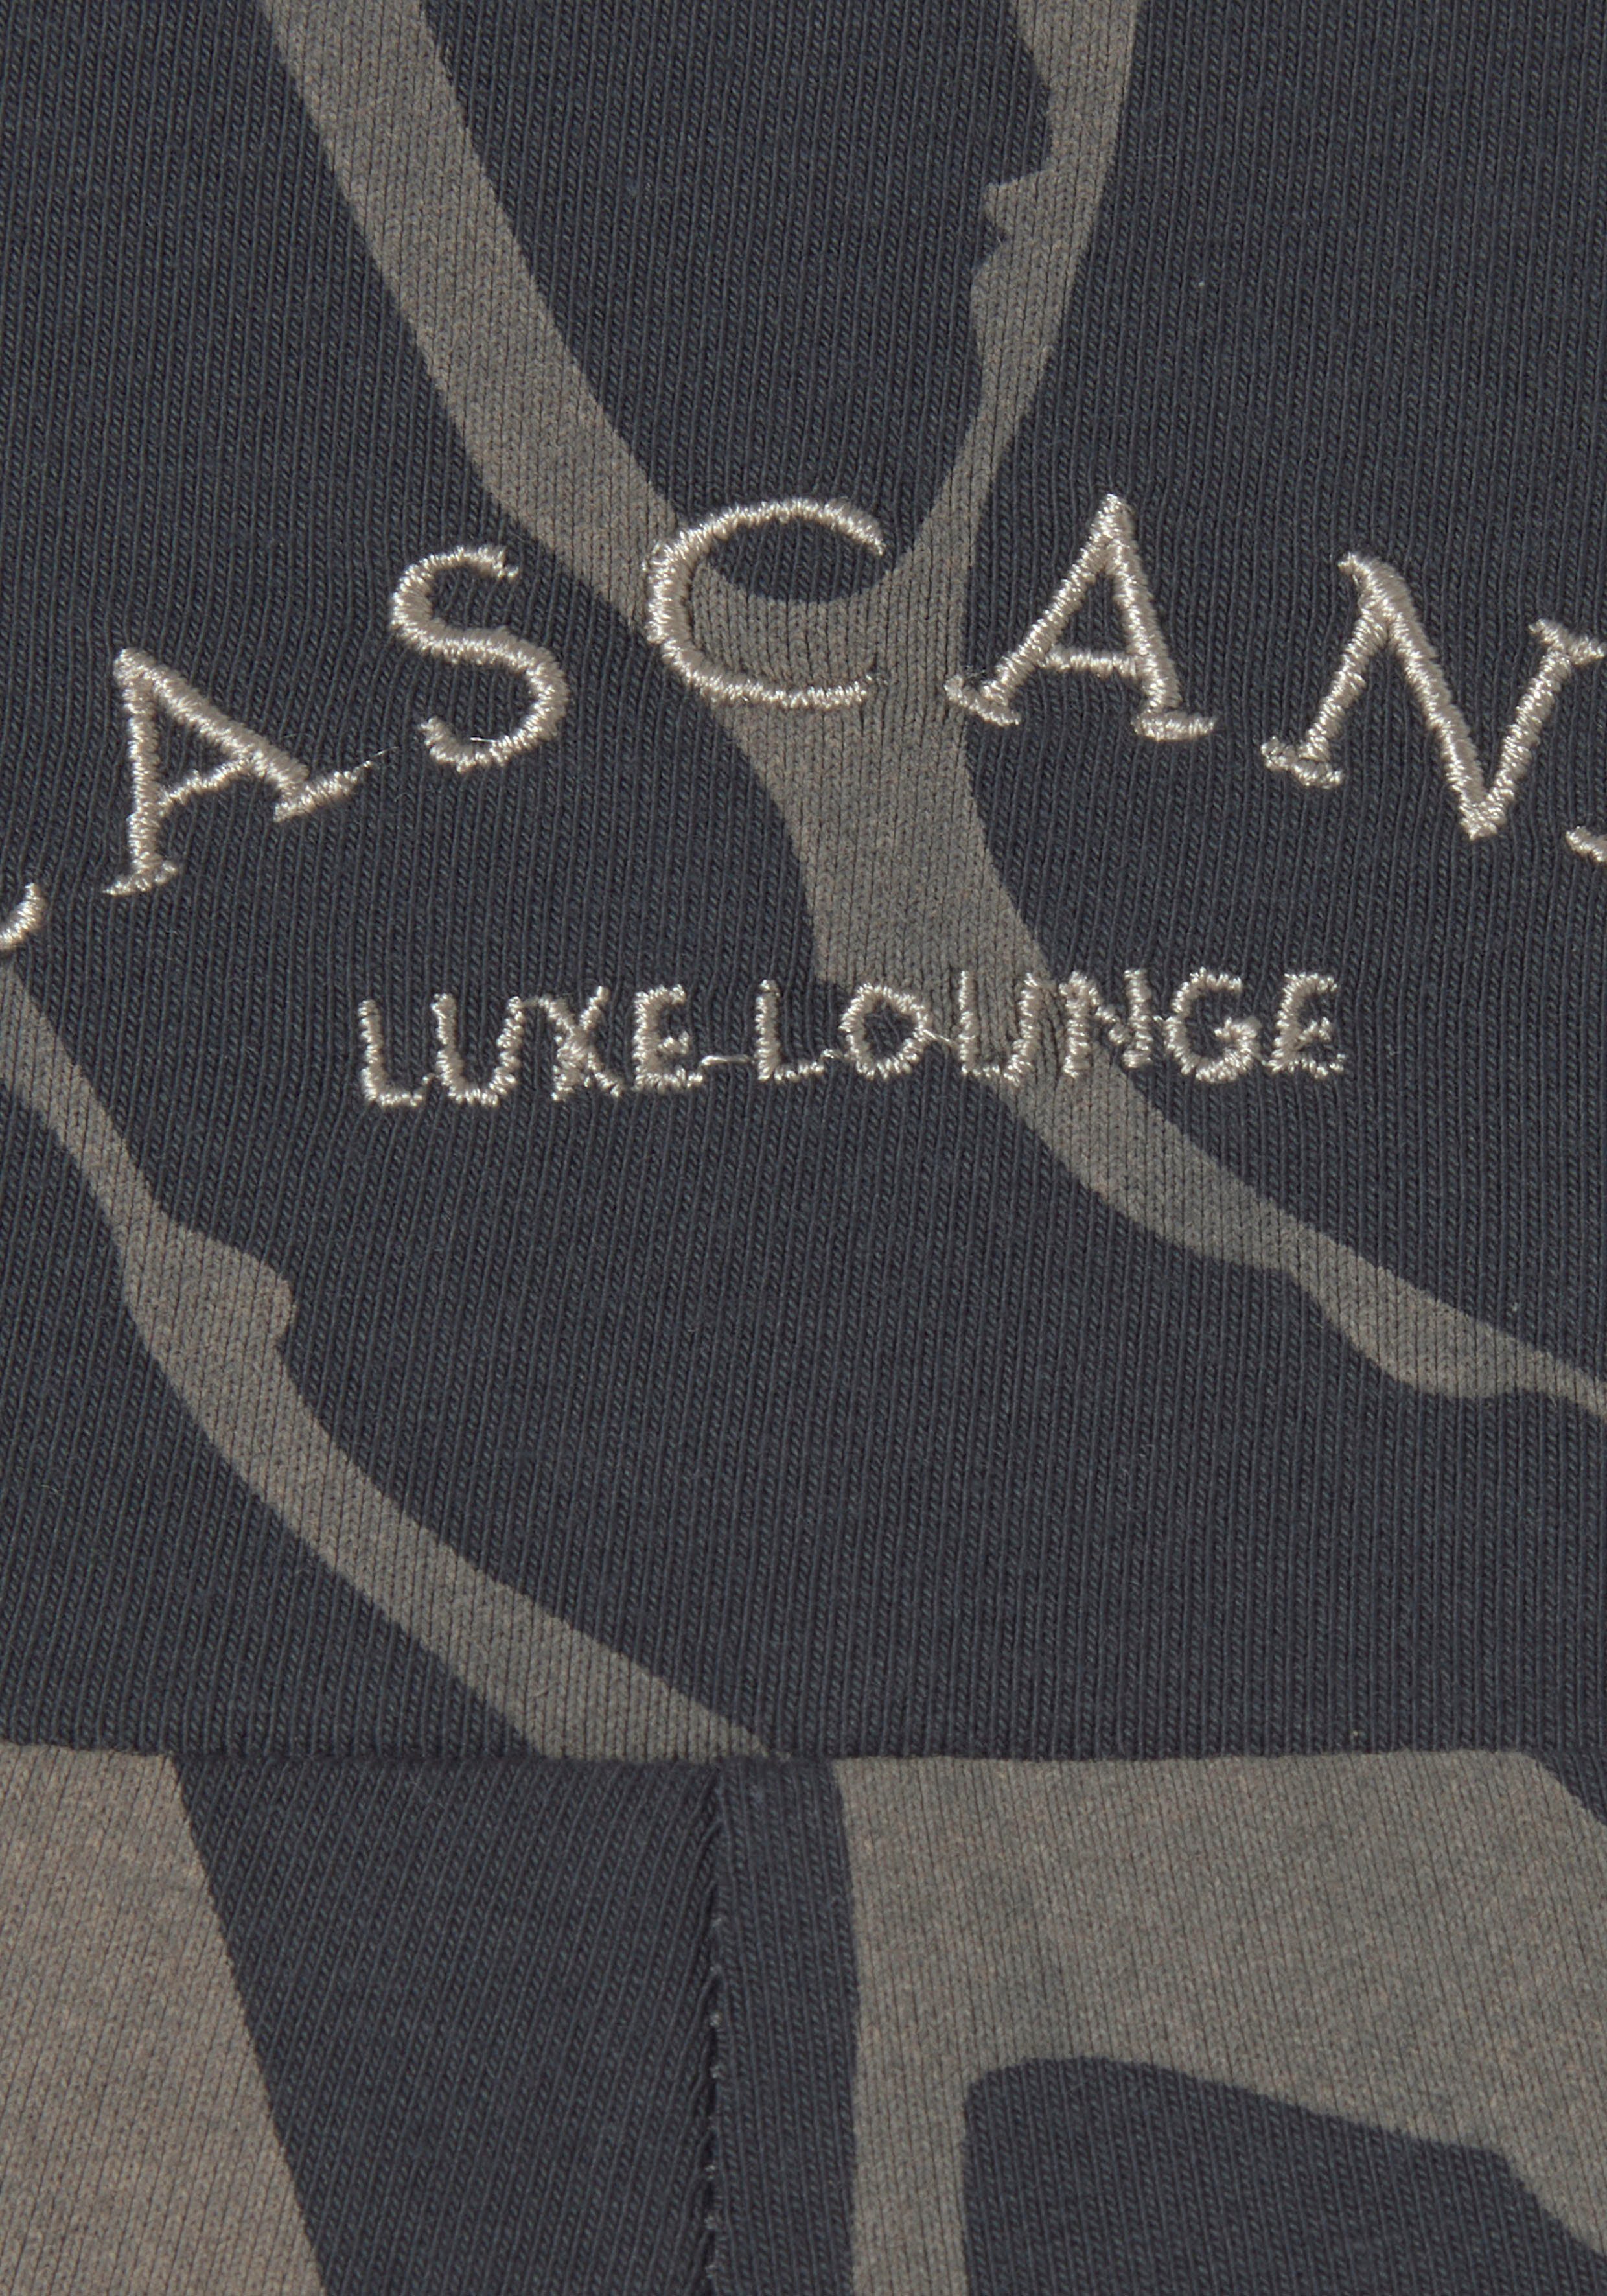 LASCANA Leggings -Loungehose mit Zebramuster und Loungewear Bund, breitem dunkelgrau-taupe